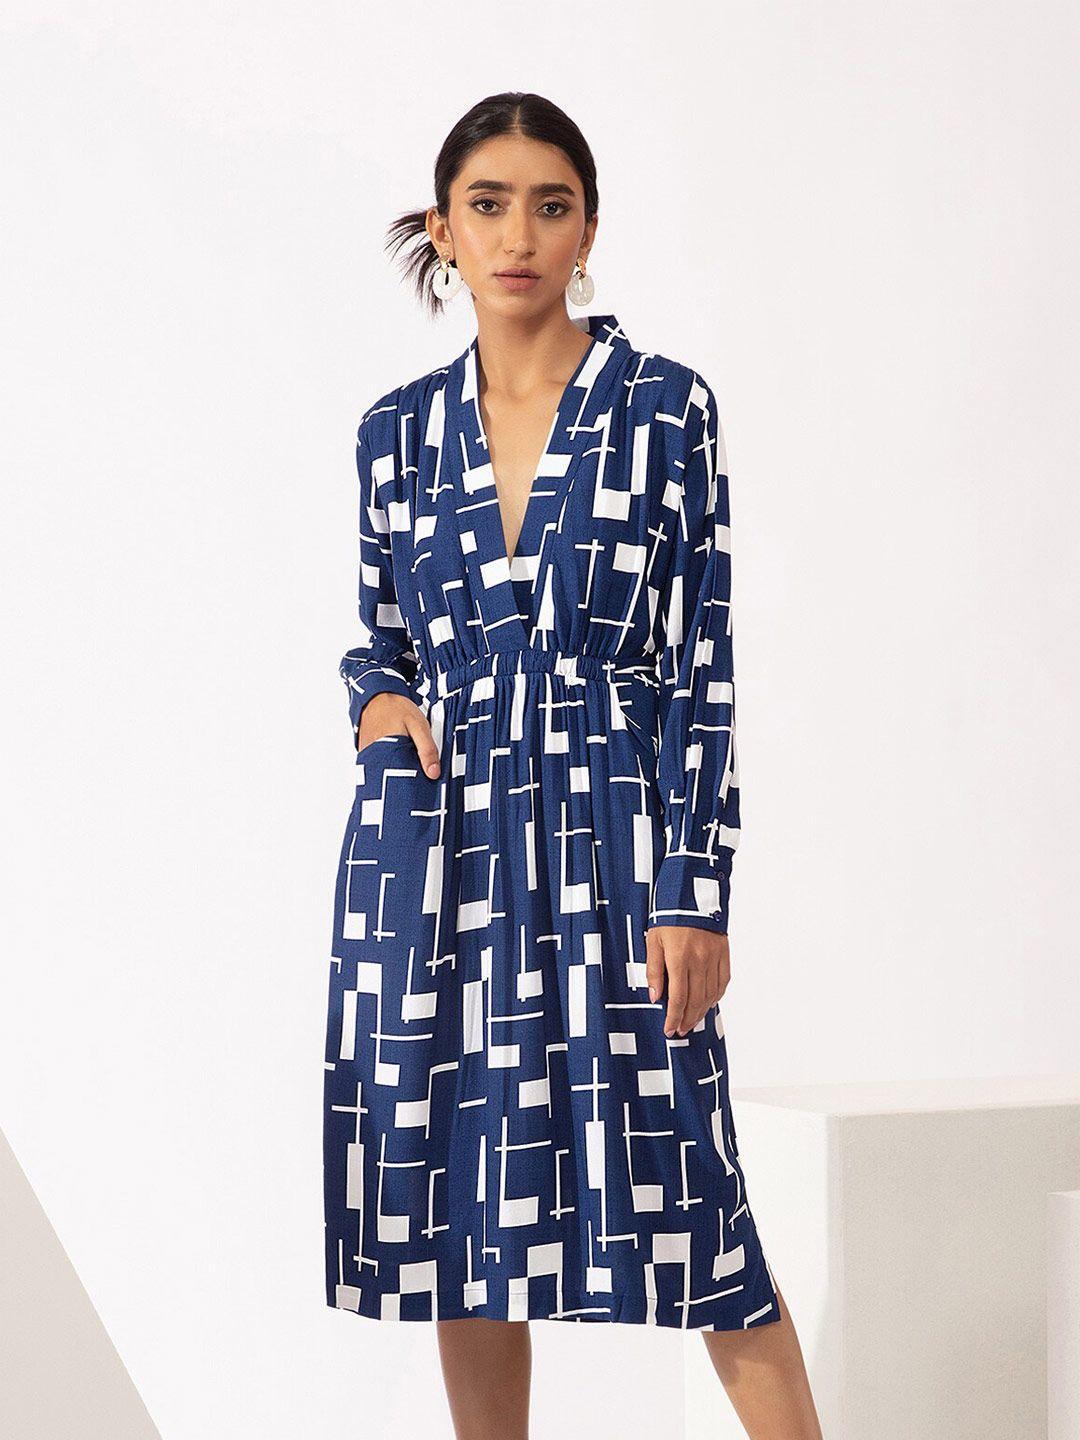 20dresses women geometric printed blue & white dress